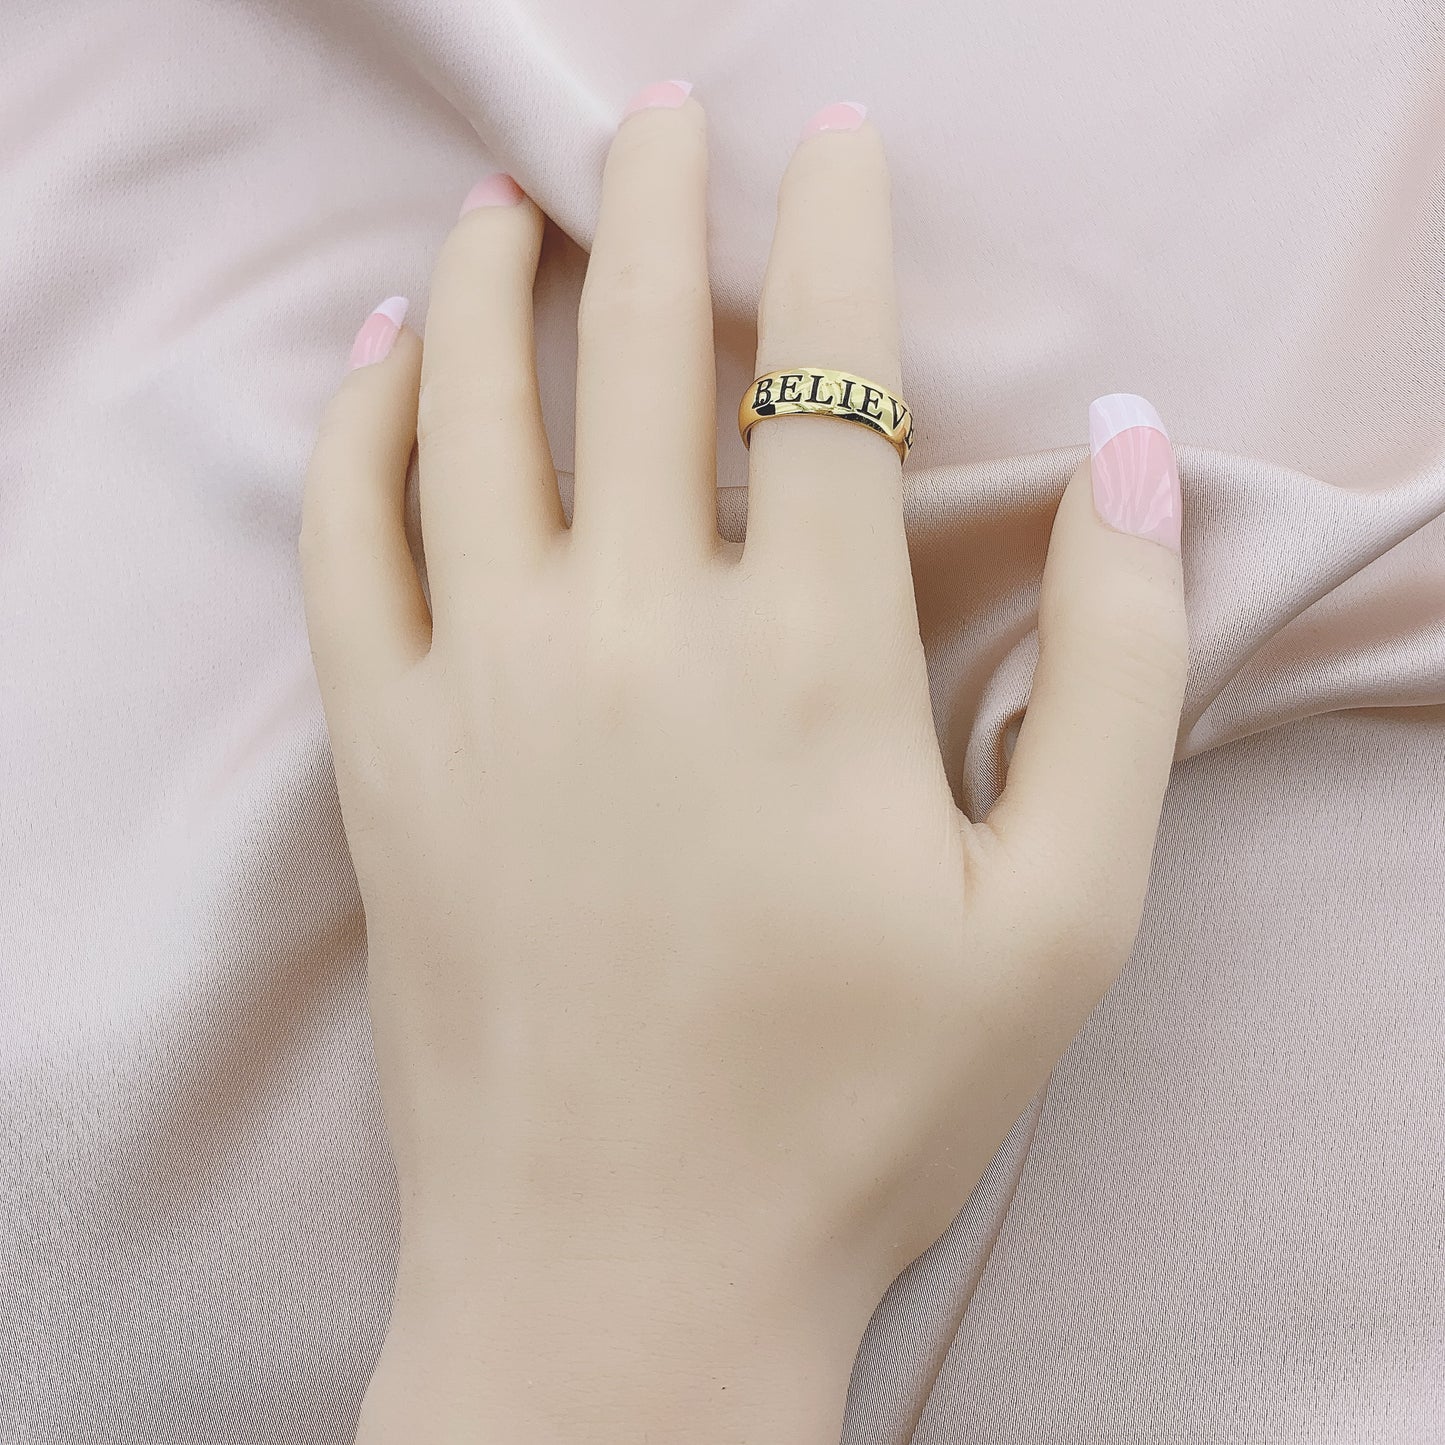 Women's Engraved Believe Plain Ring